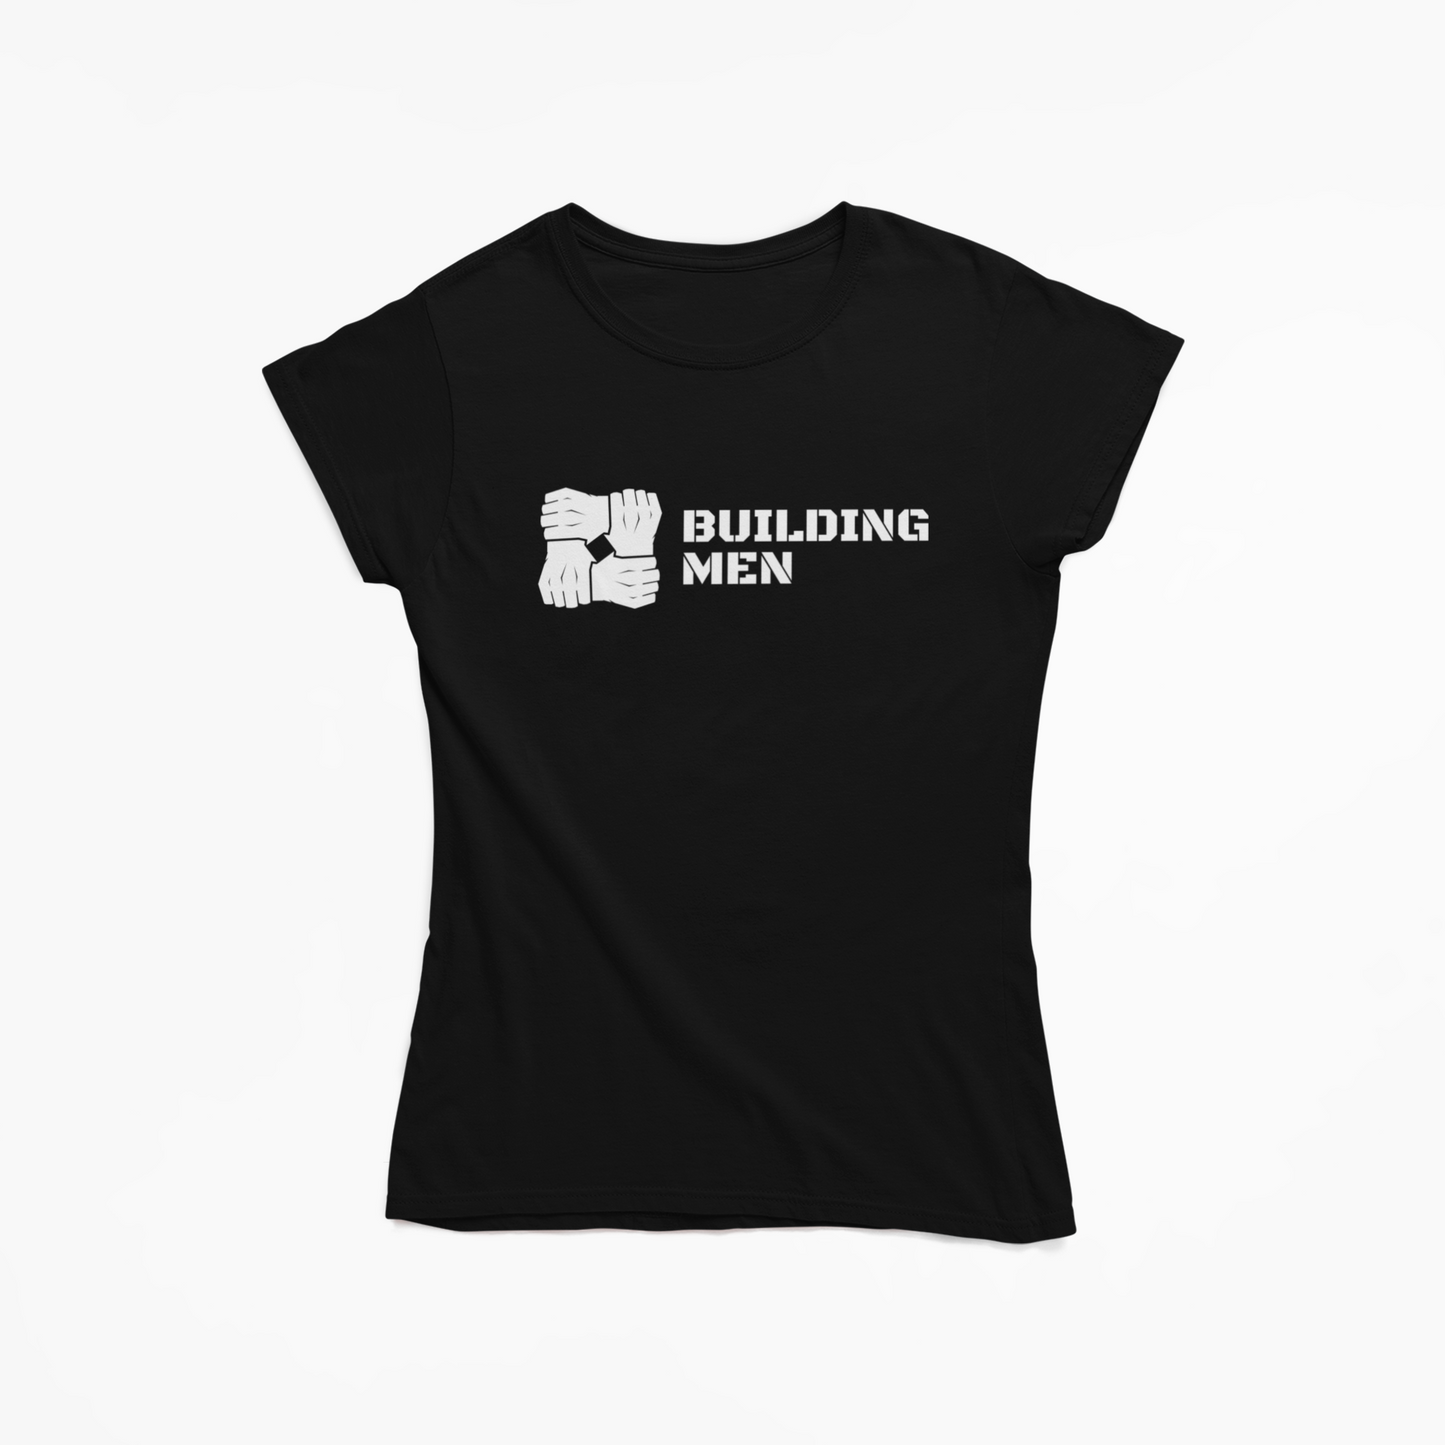 Building Men: Women's Emblem Tee